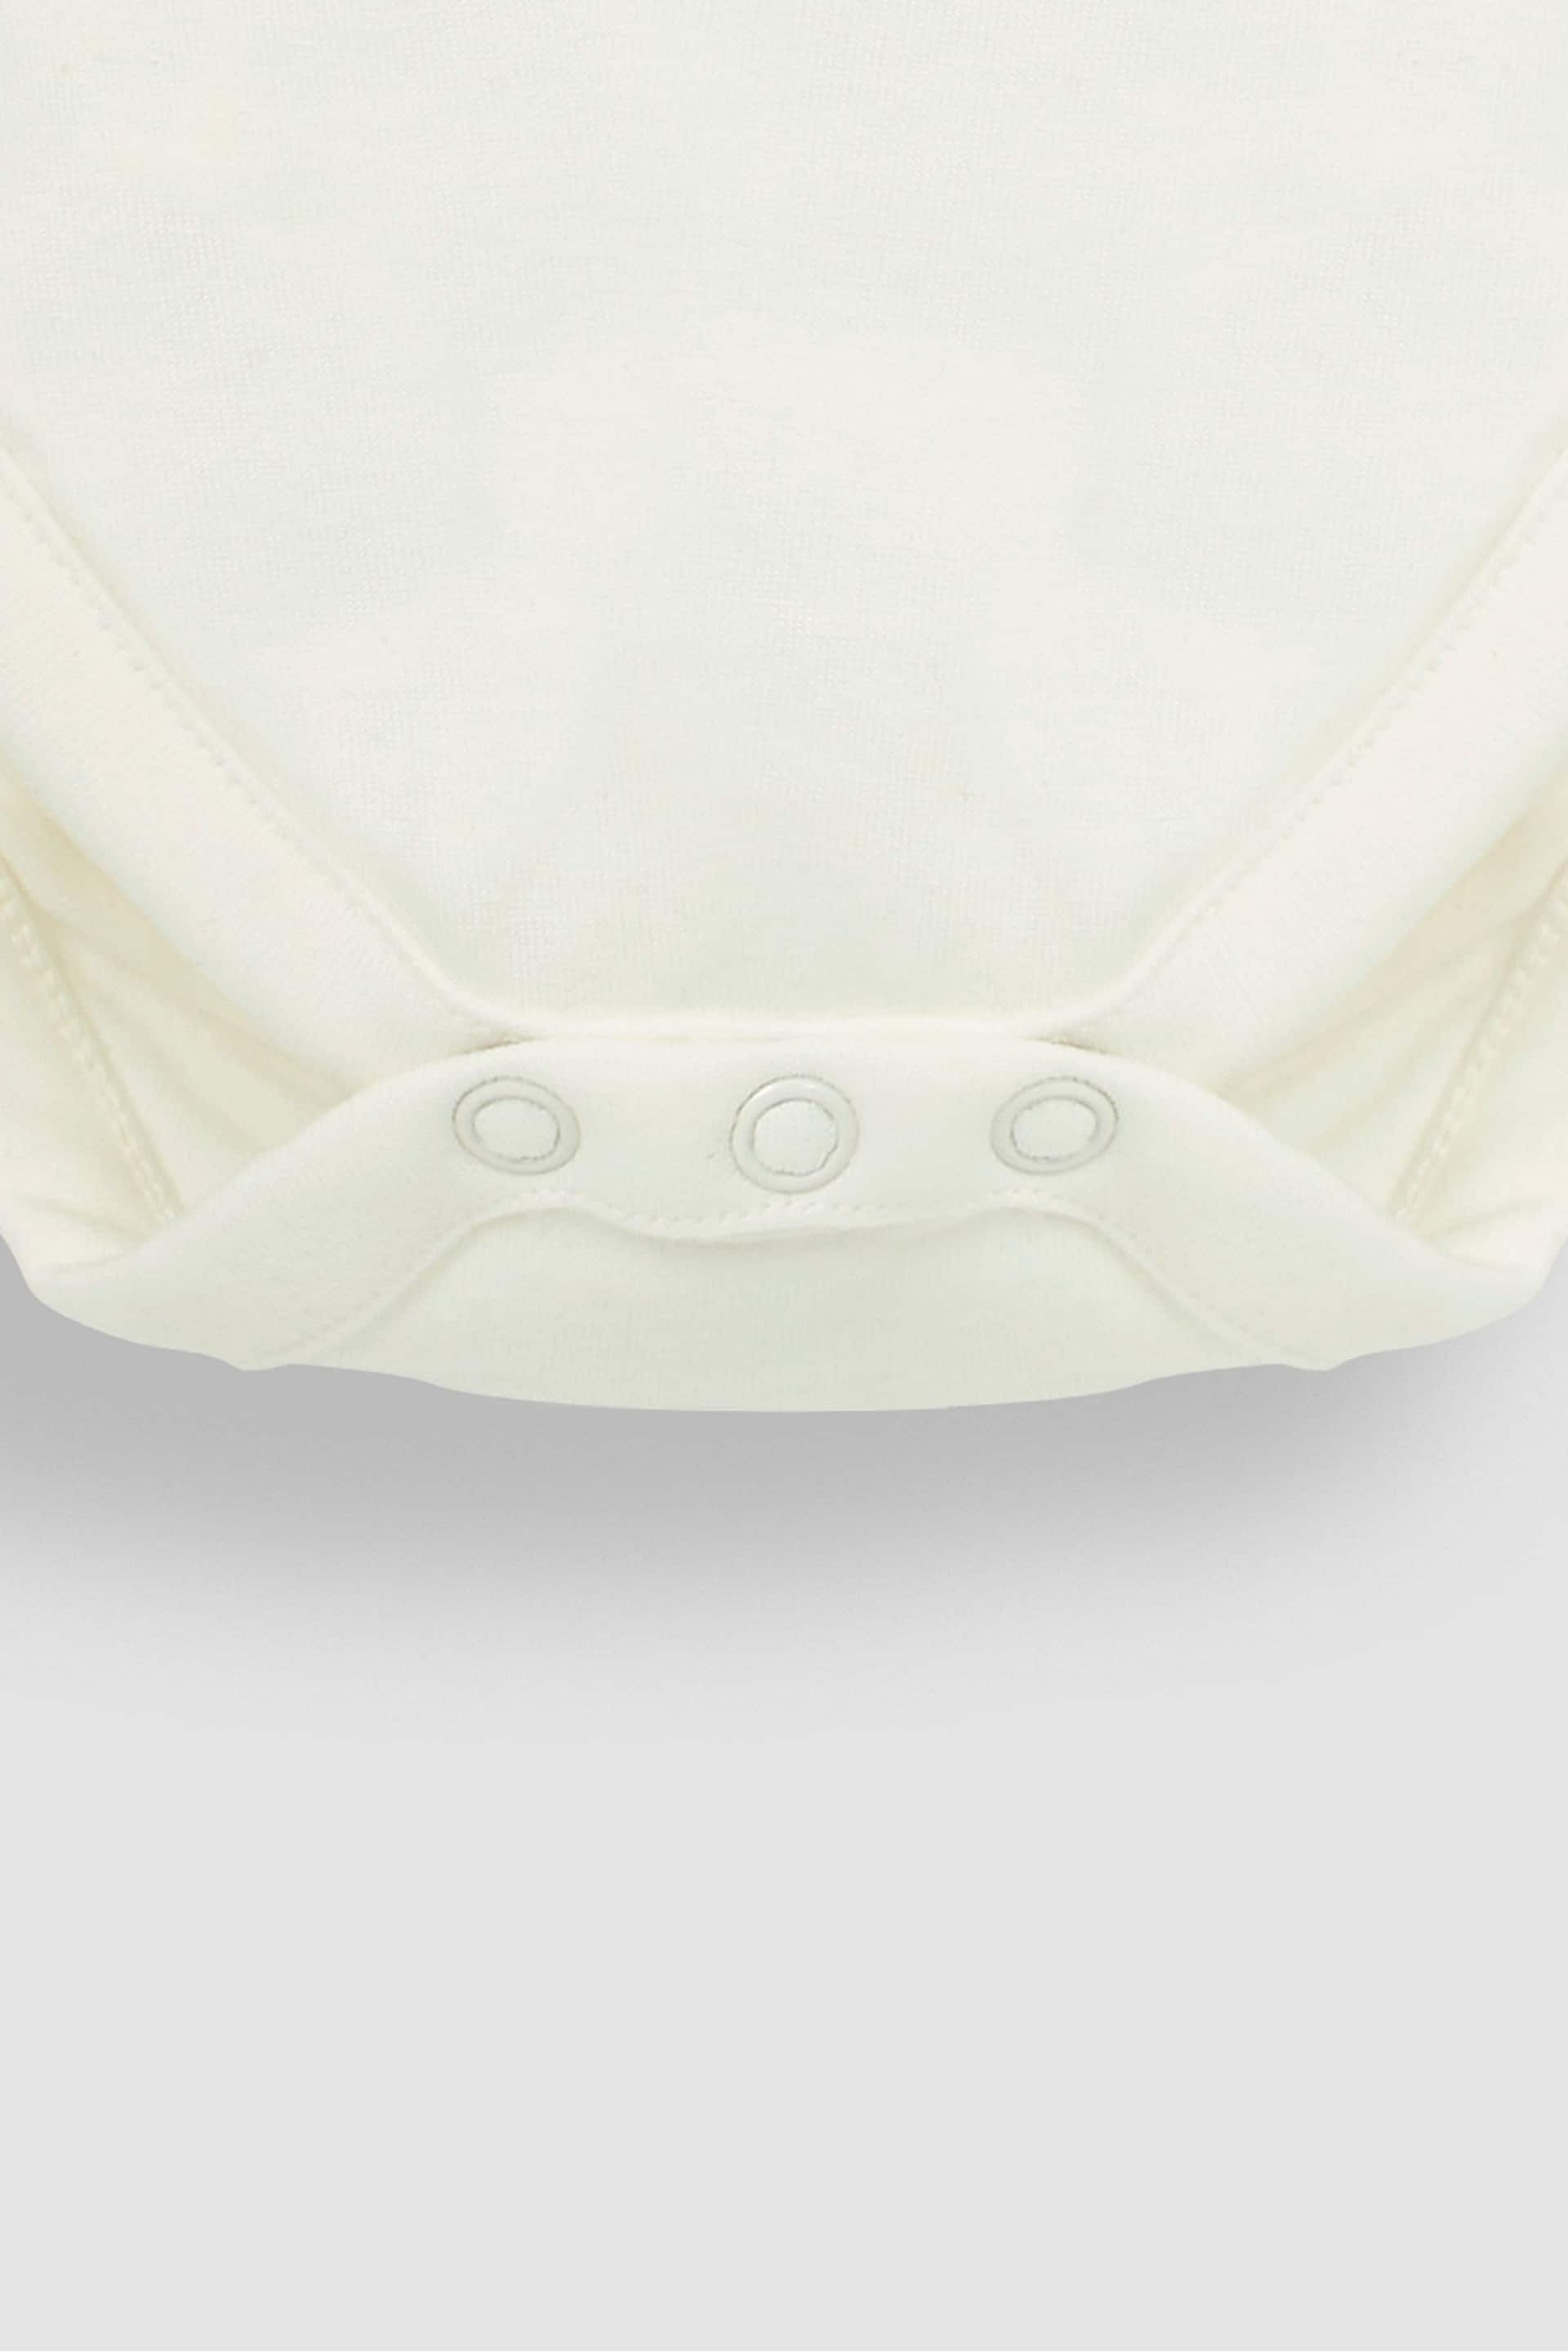 JoJo Maman Bébé Cream Heart Embroidered Collar Bodysuit - Image 3 of 3